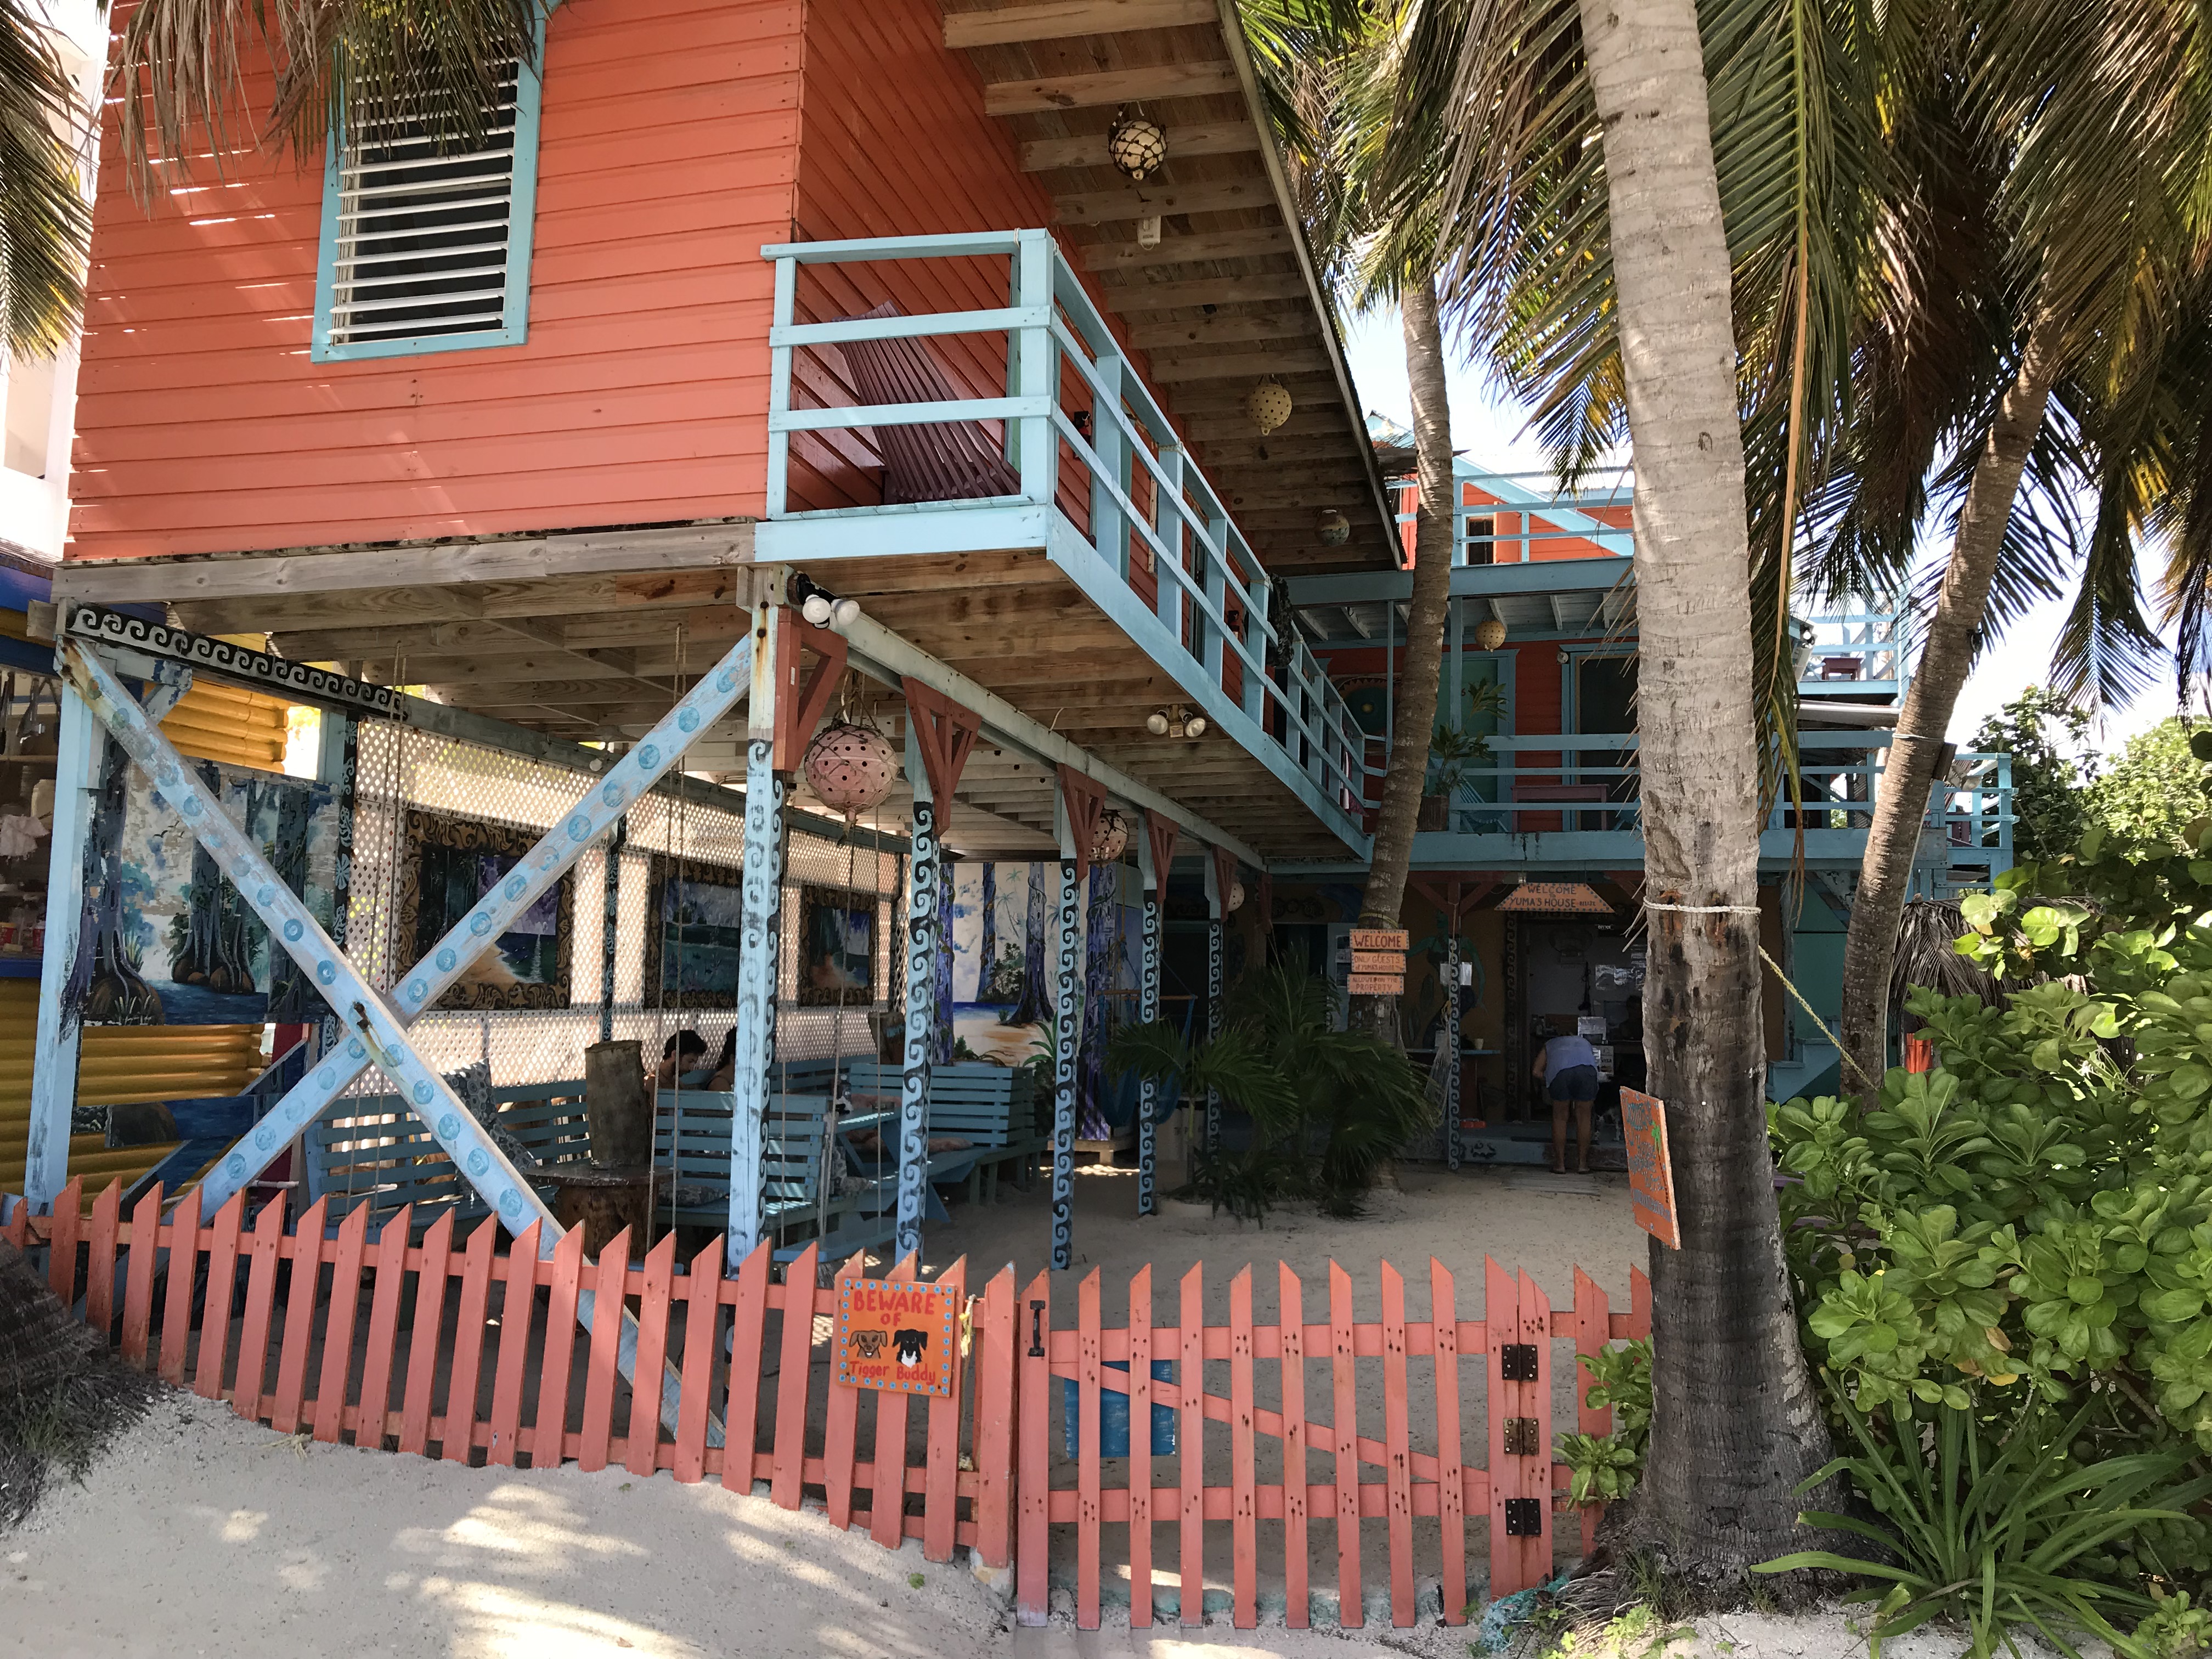 Yuma's House Belize